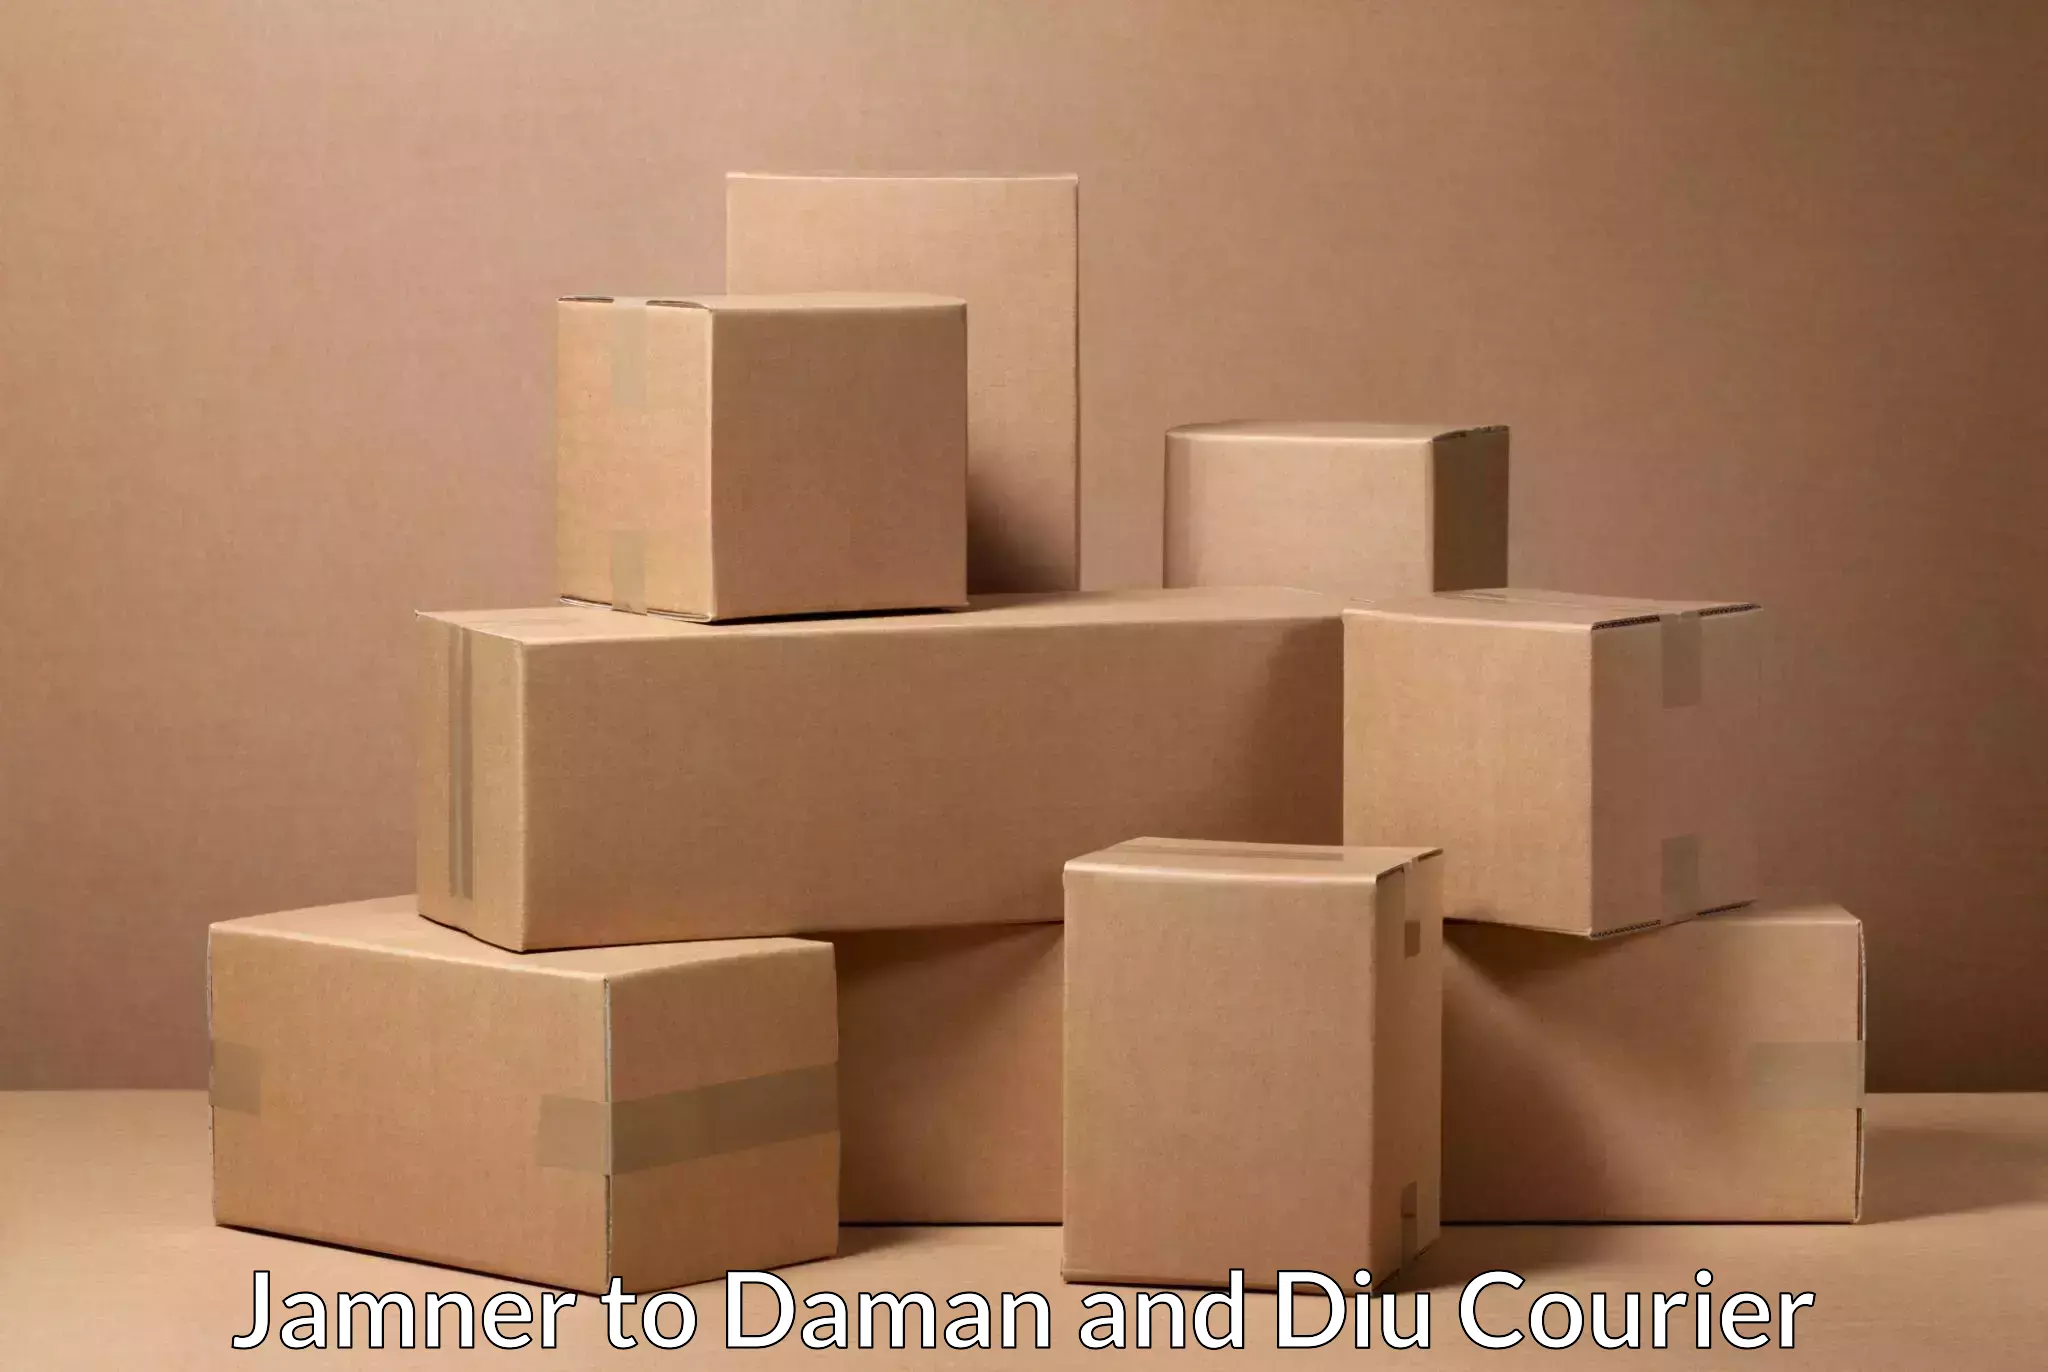 Delivery service partnership Jamner to Daman and Diu